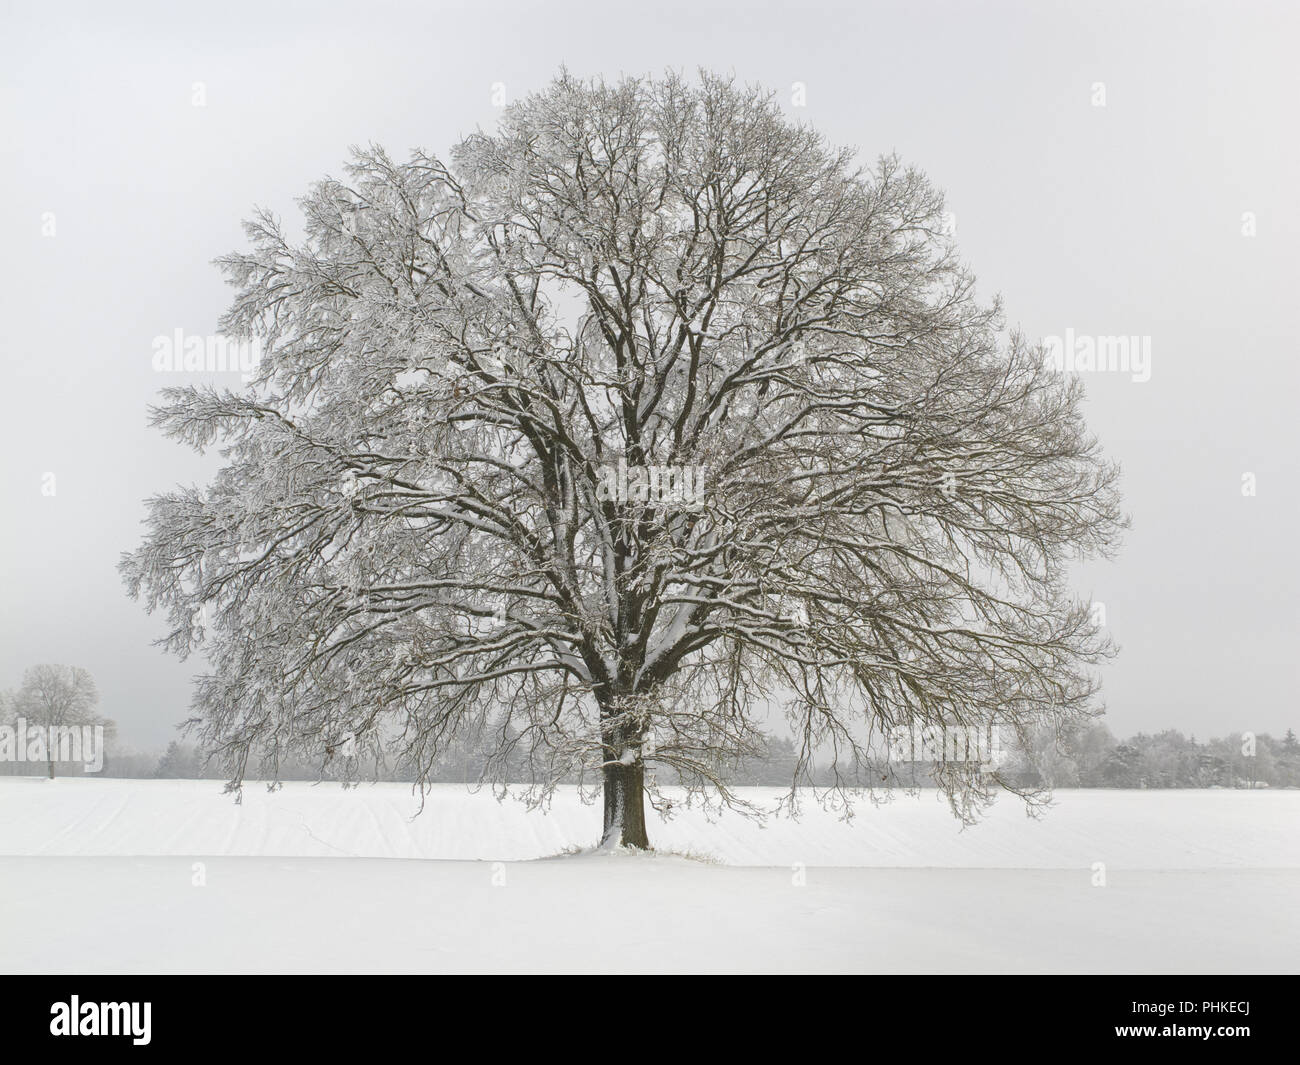 single big oak tree in field with perfect treetop Stock Photo